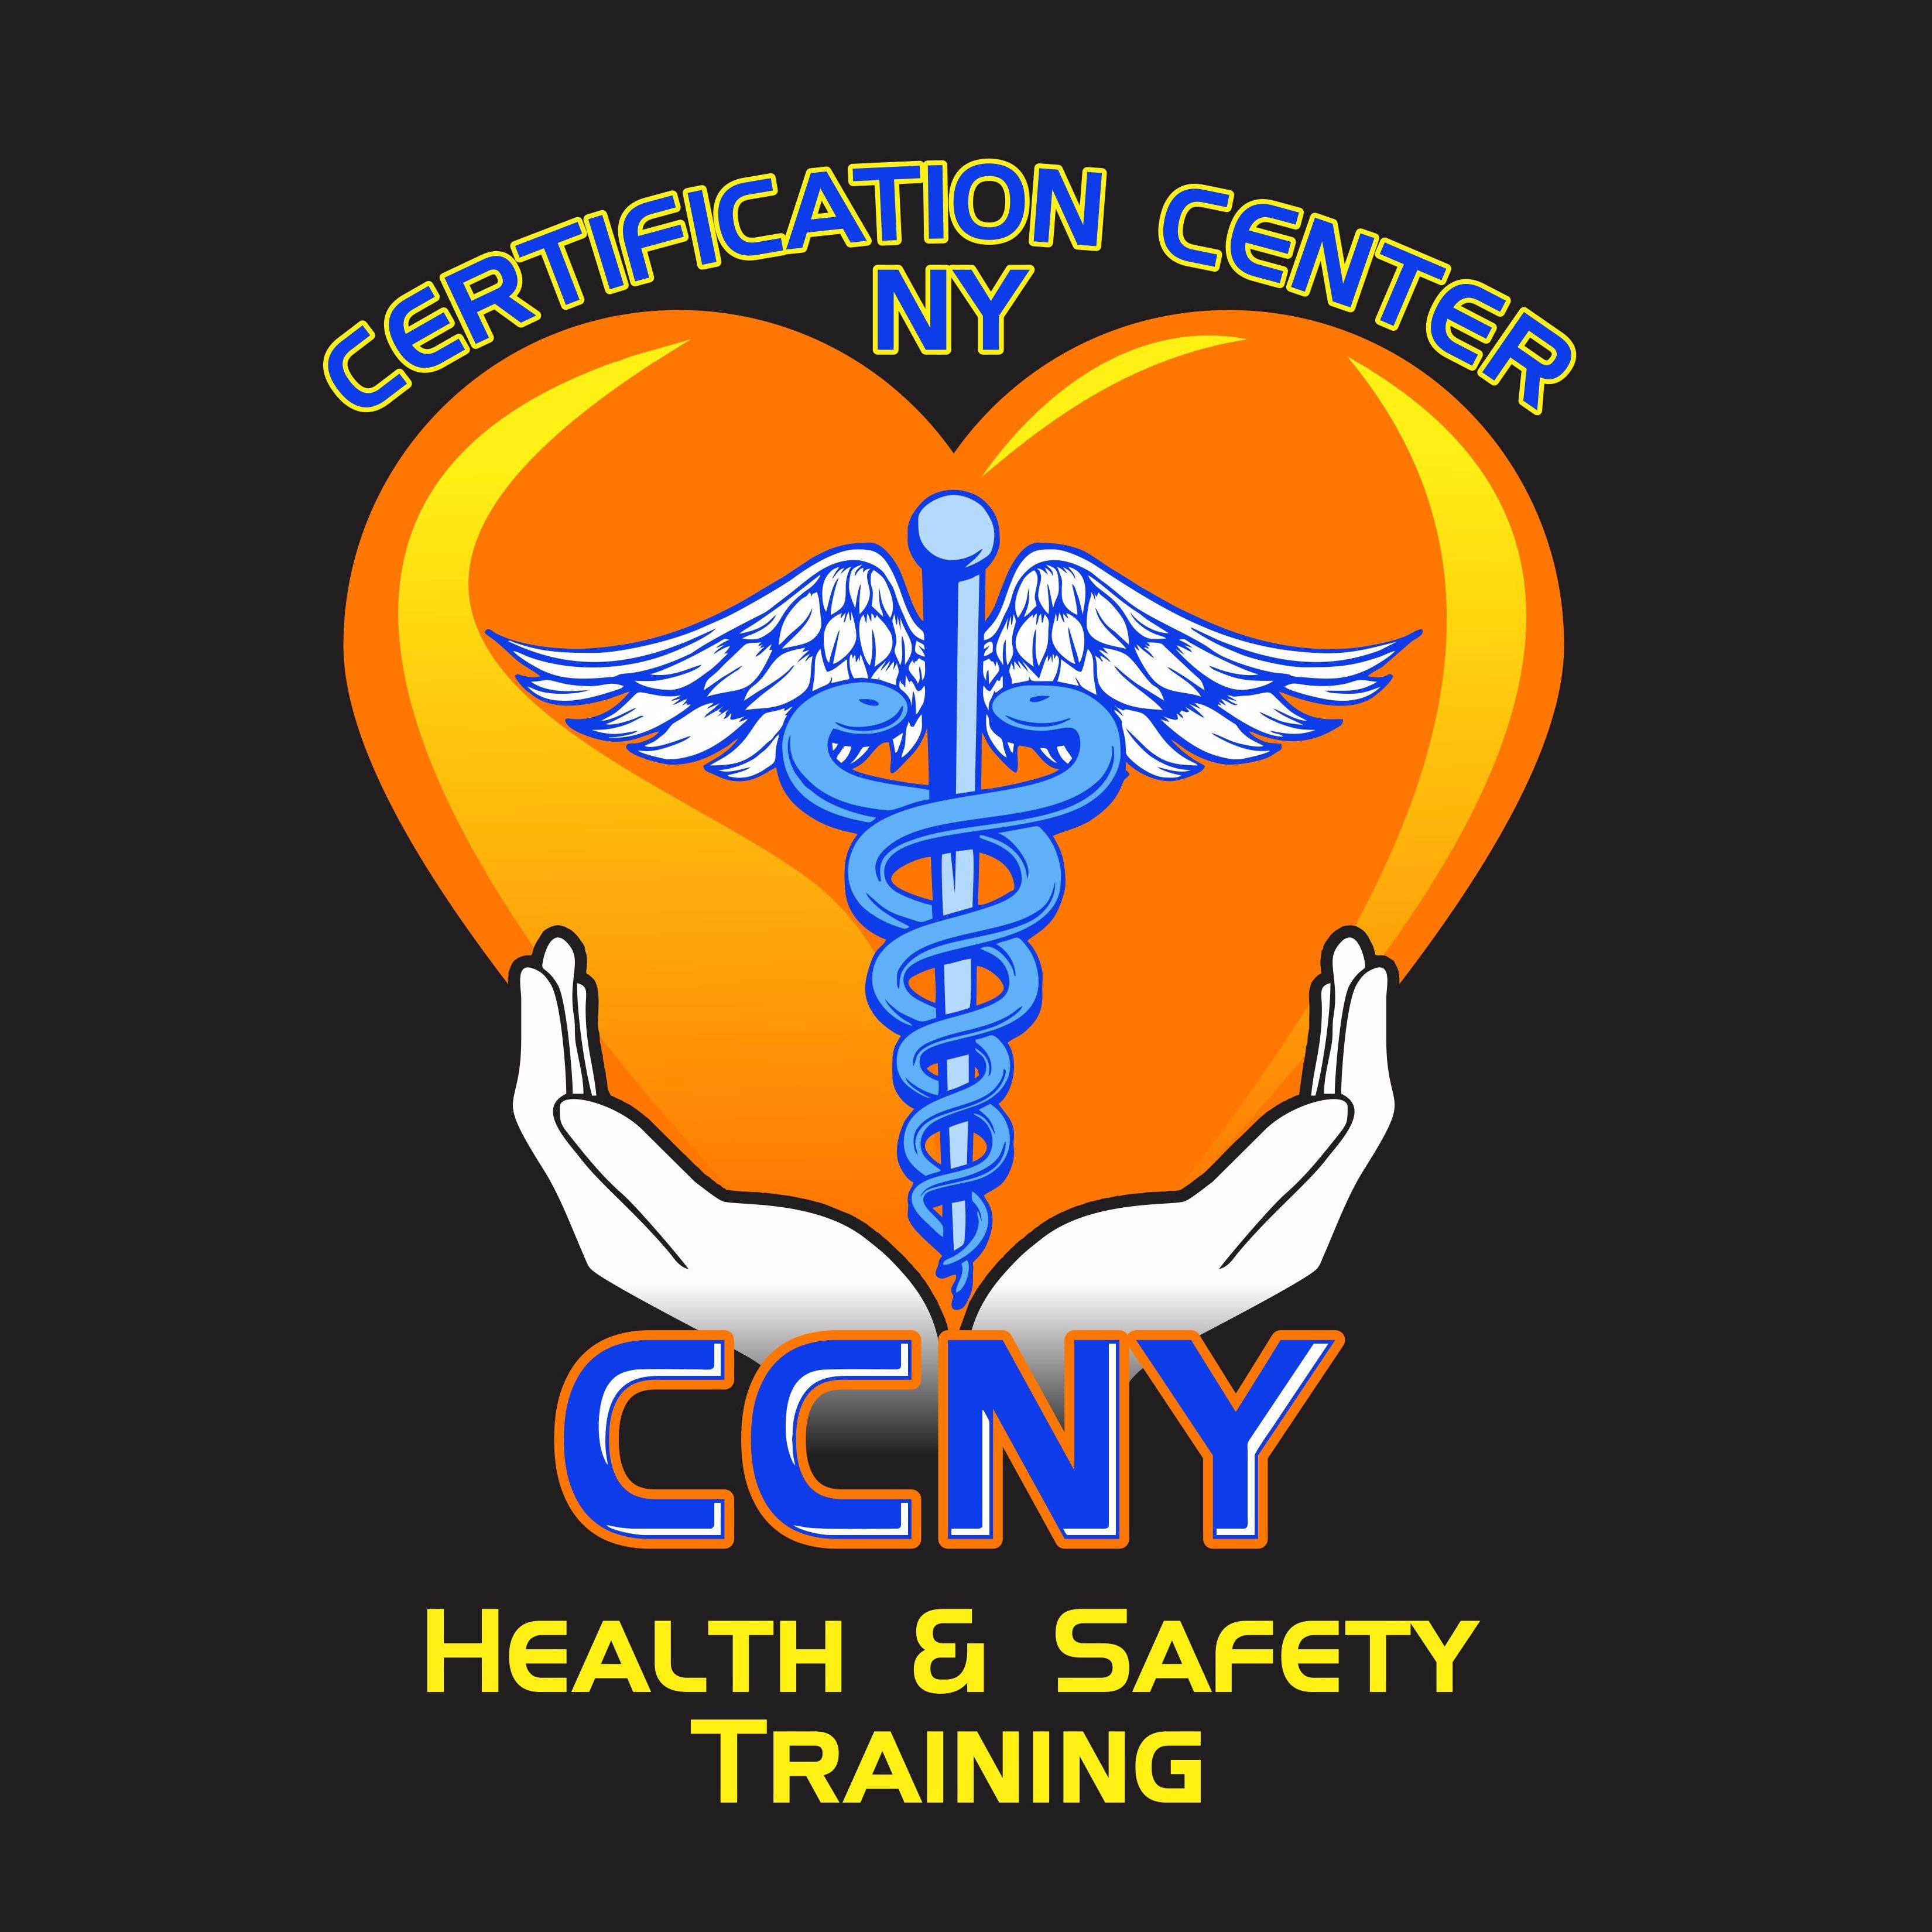 Certification Center NY